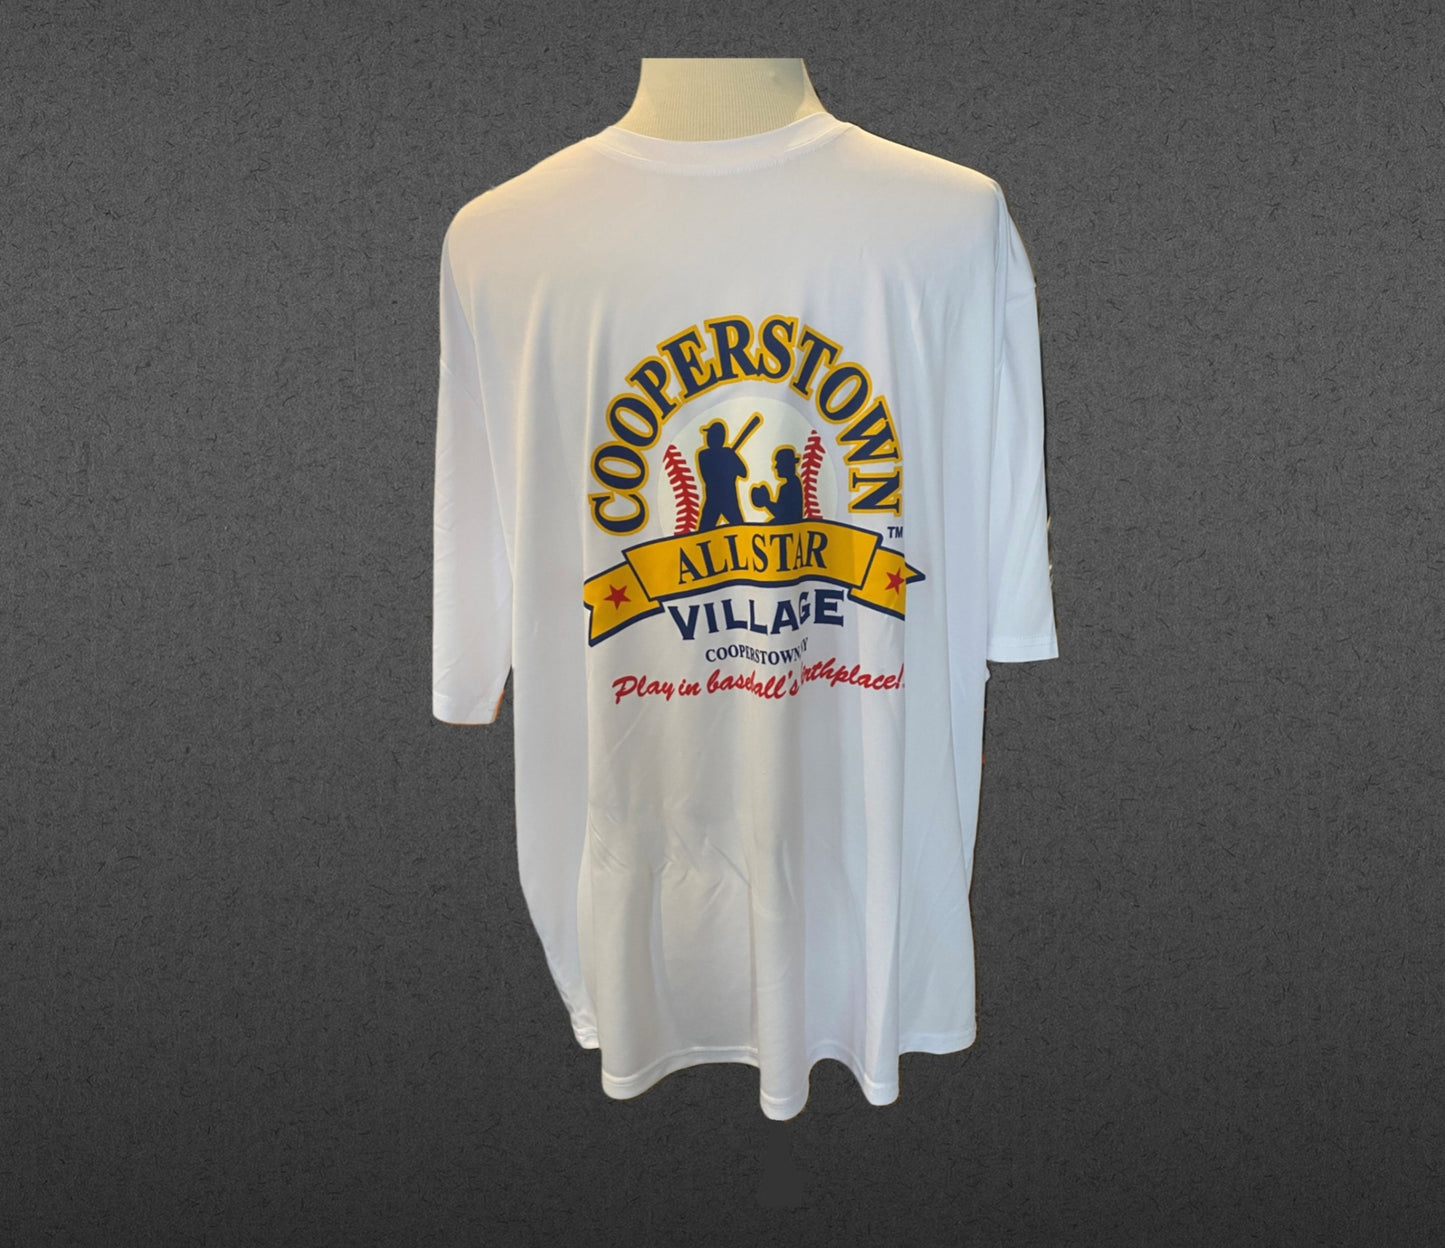 Cooperstown All Star Village Logo T-Shirt